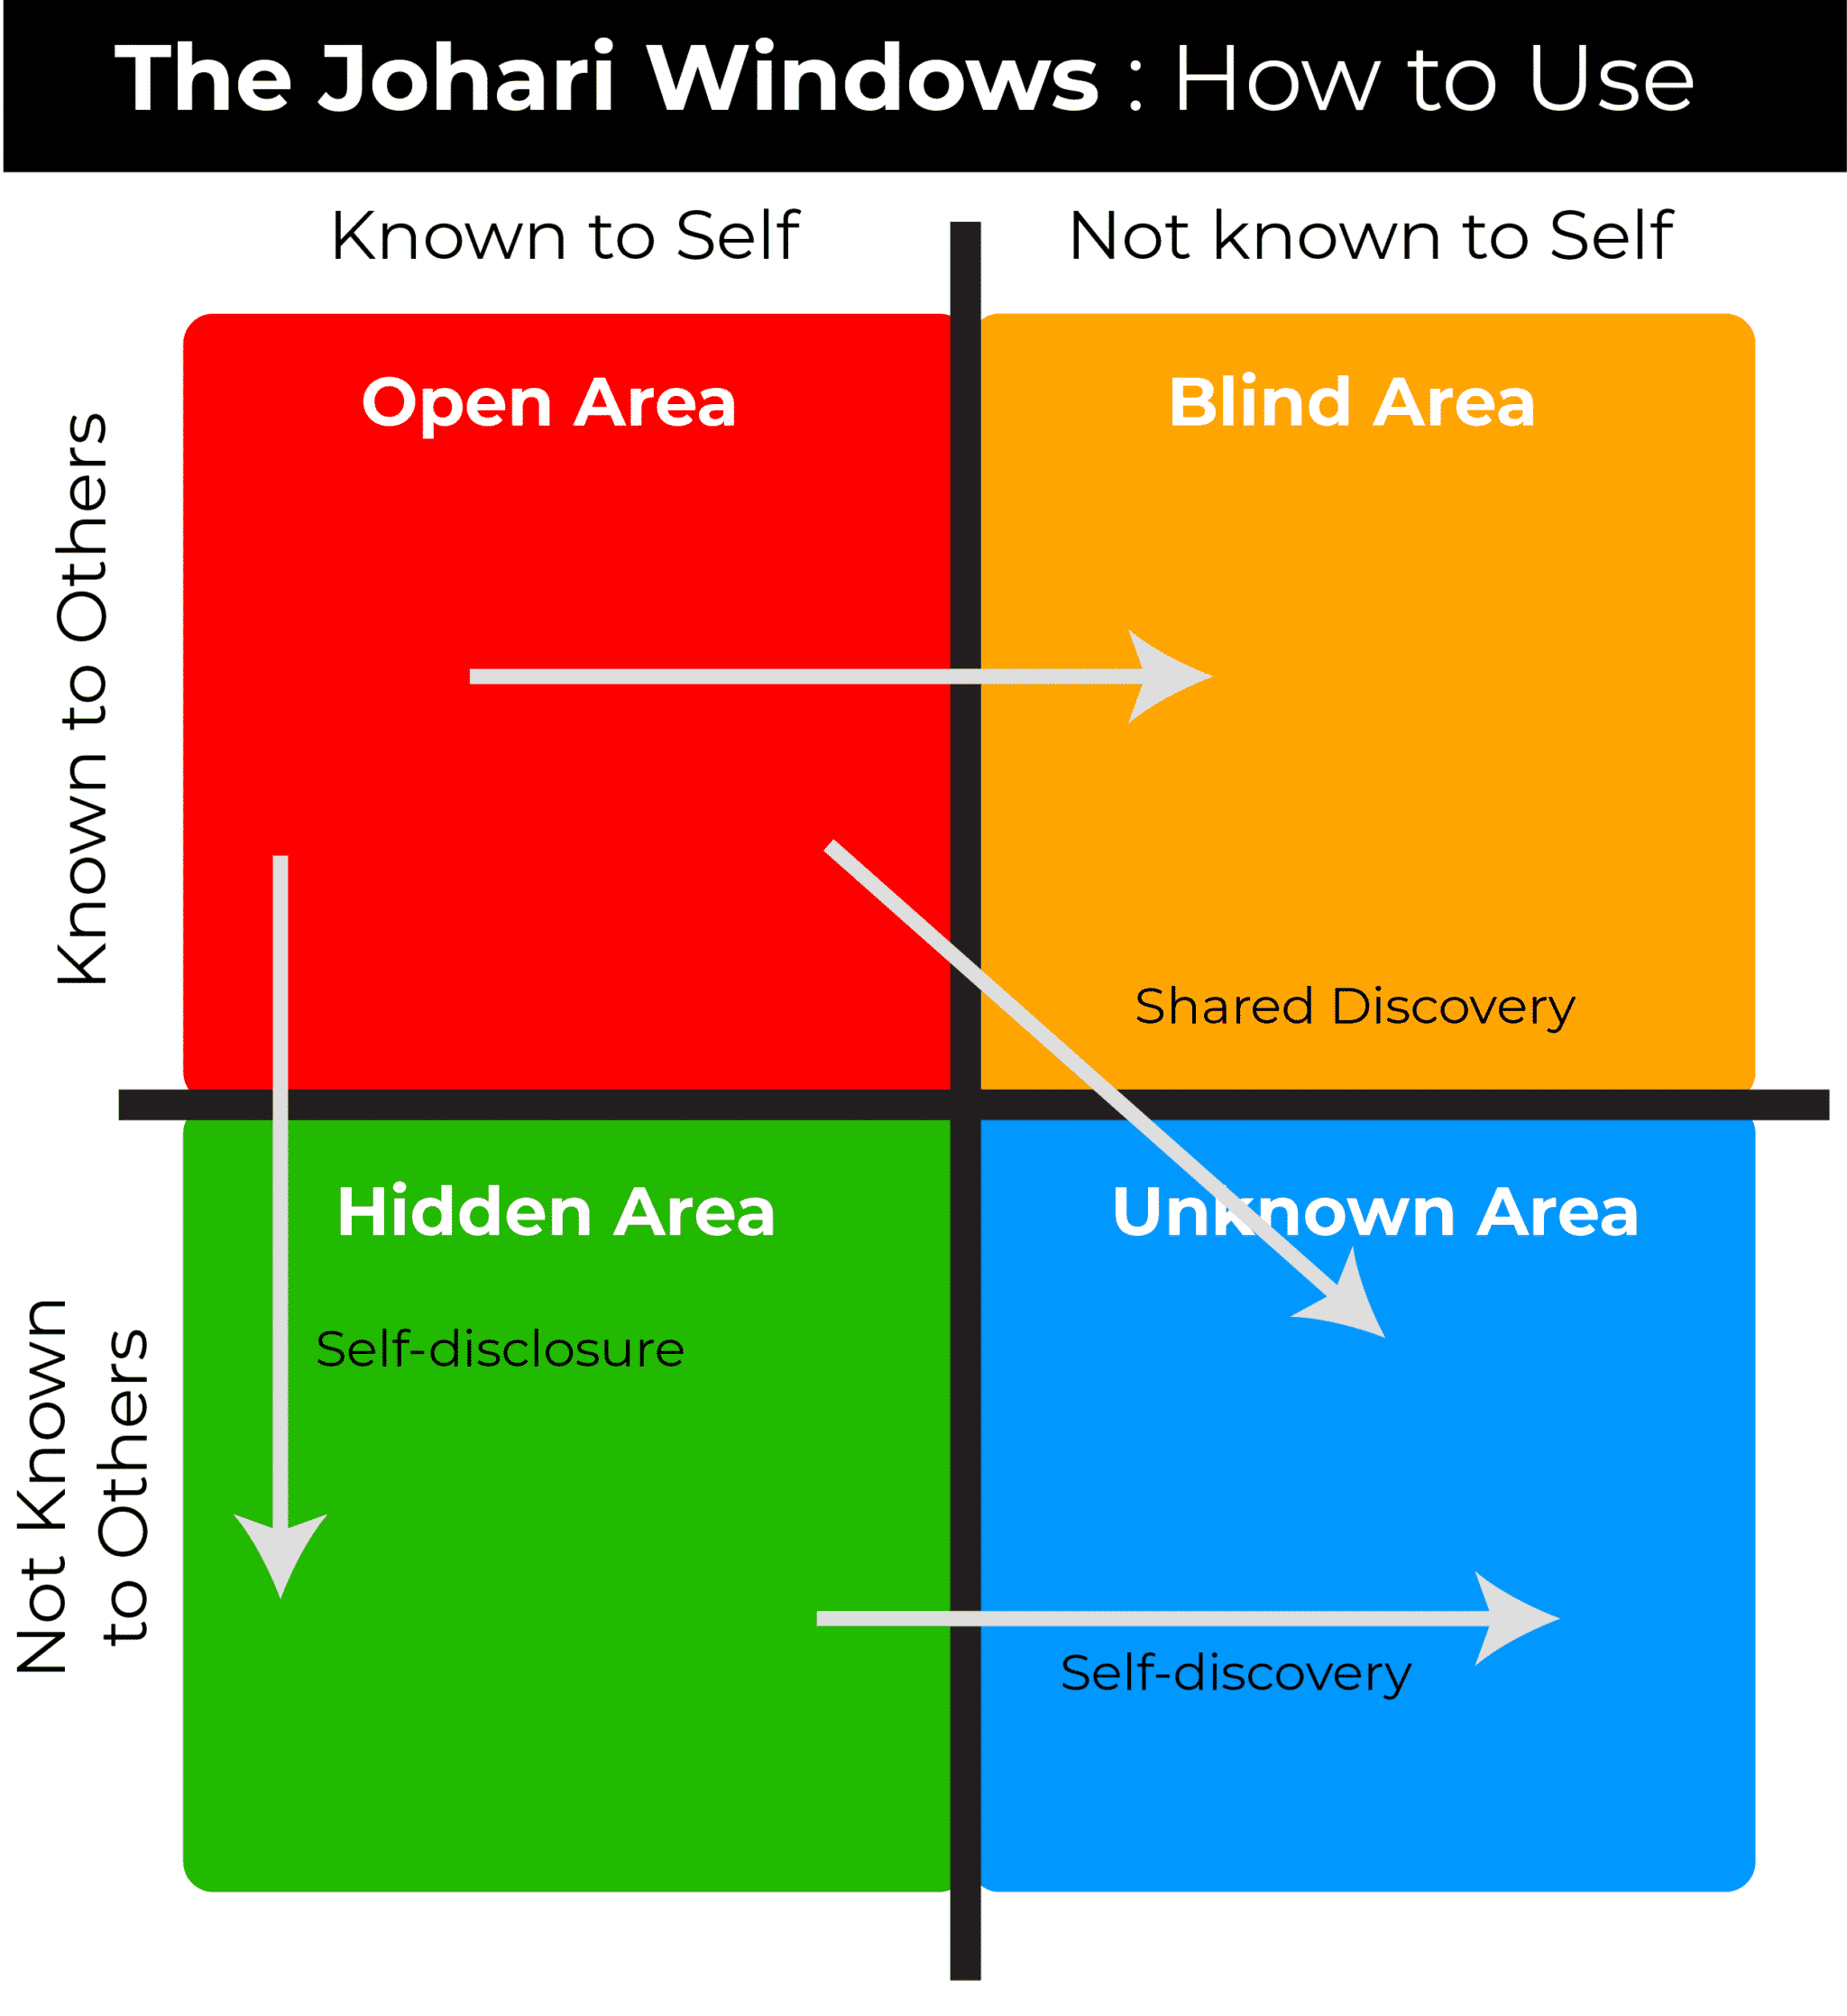 HOW TO USE THE JOHARI WINDOW